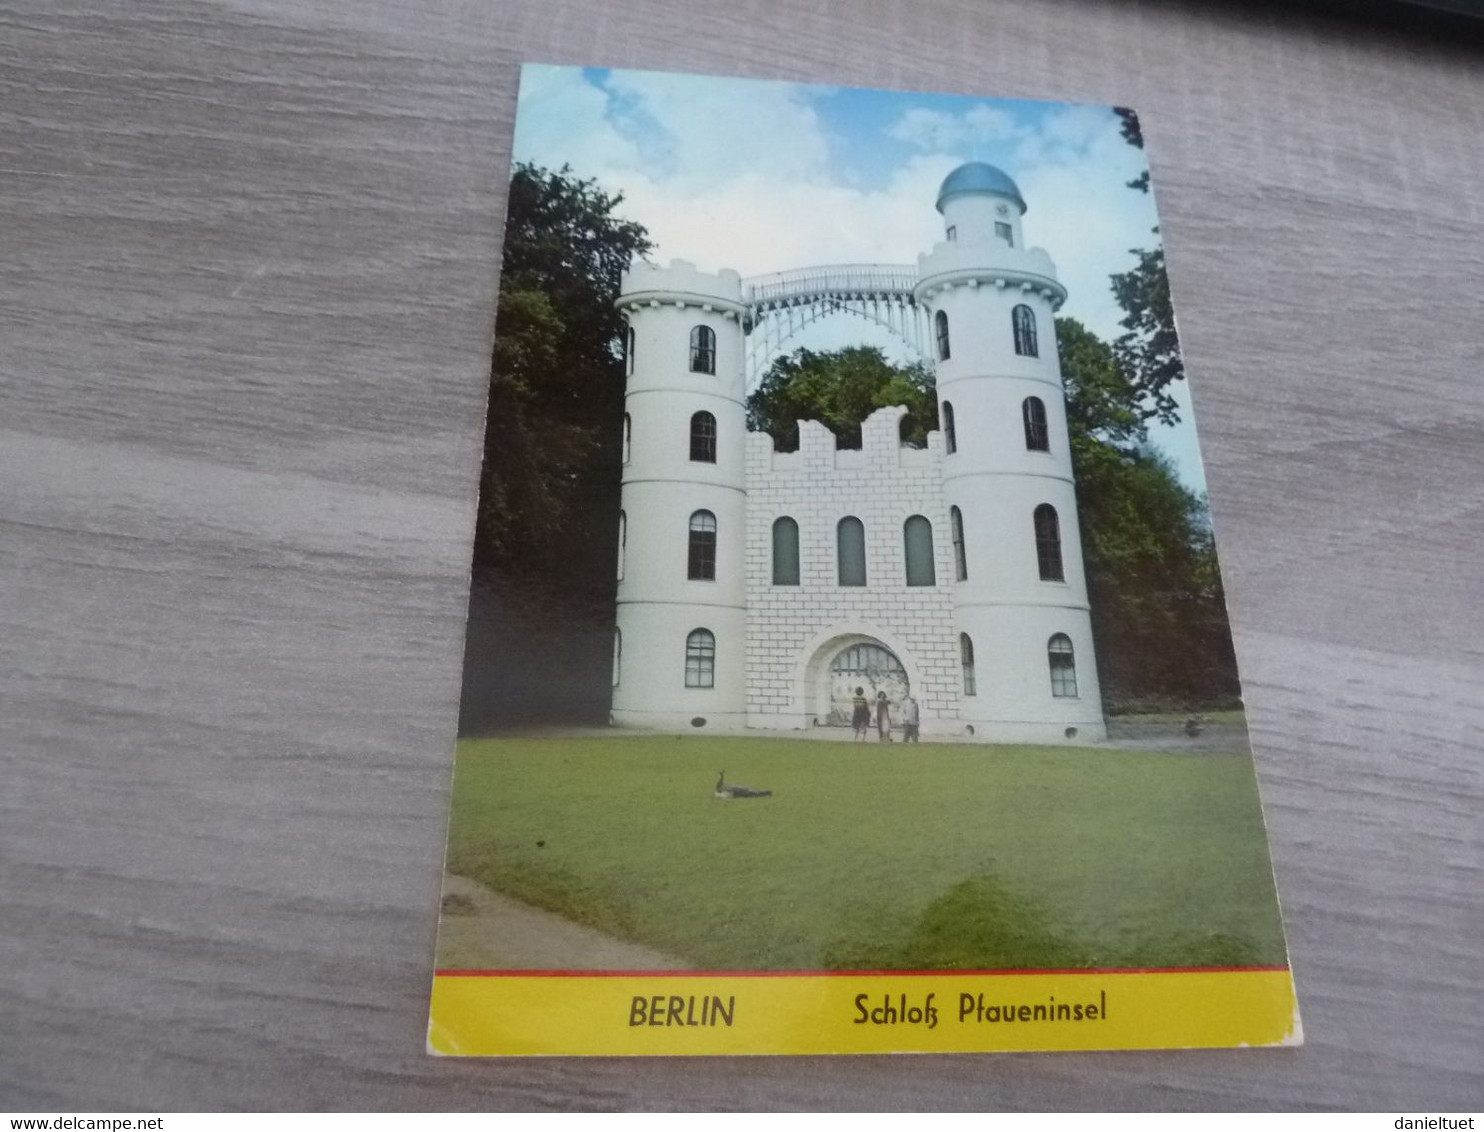 Berlin - Schlofz Pfaueninsel - 2 61 11 19 - Editions Schikkus - Année 1988 - - Schönefeld